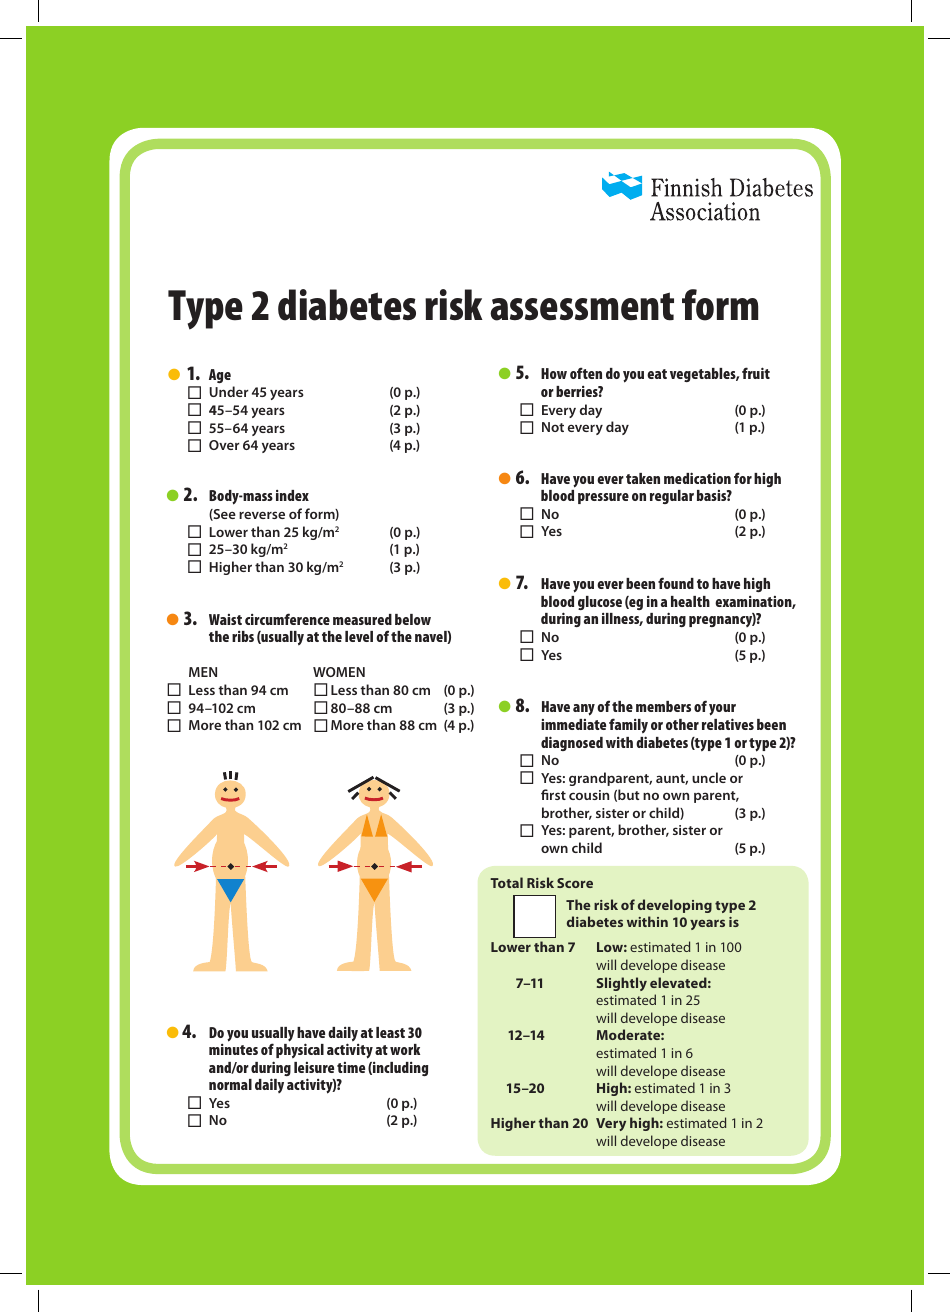 Type 2 Diabetes Risk Assessment Tool document cover